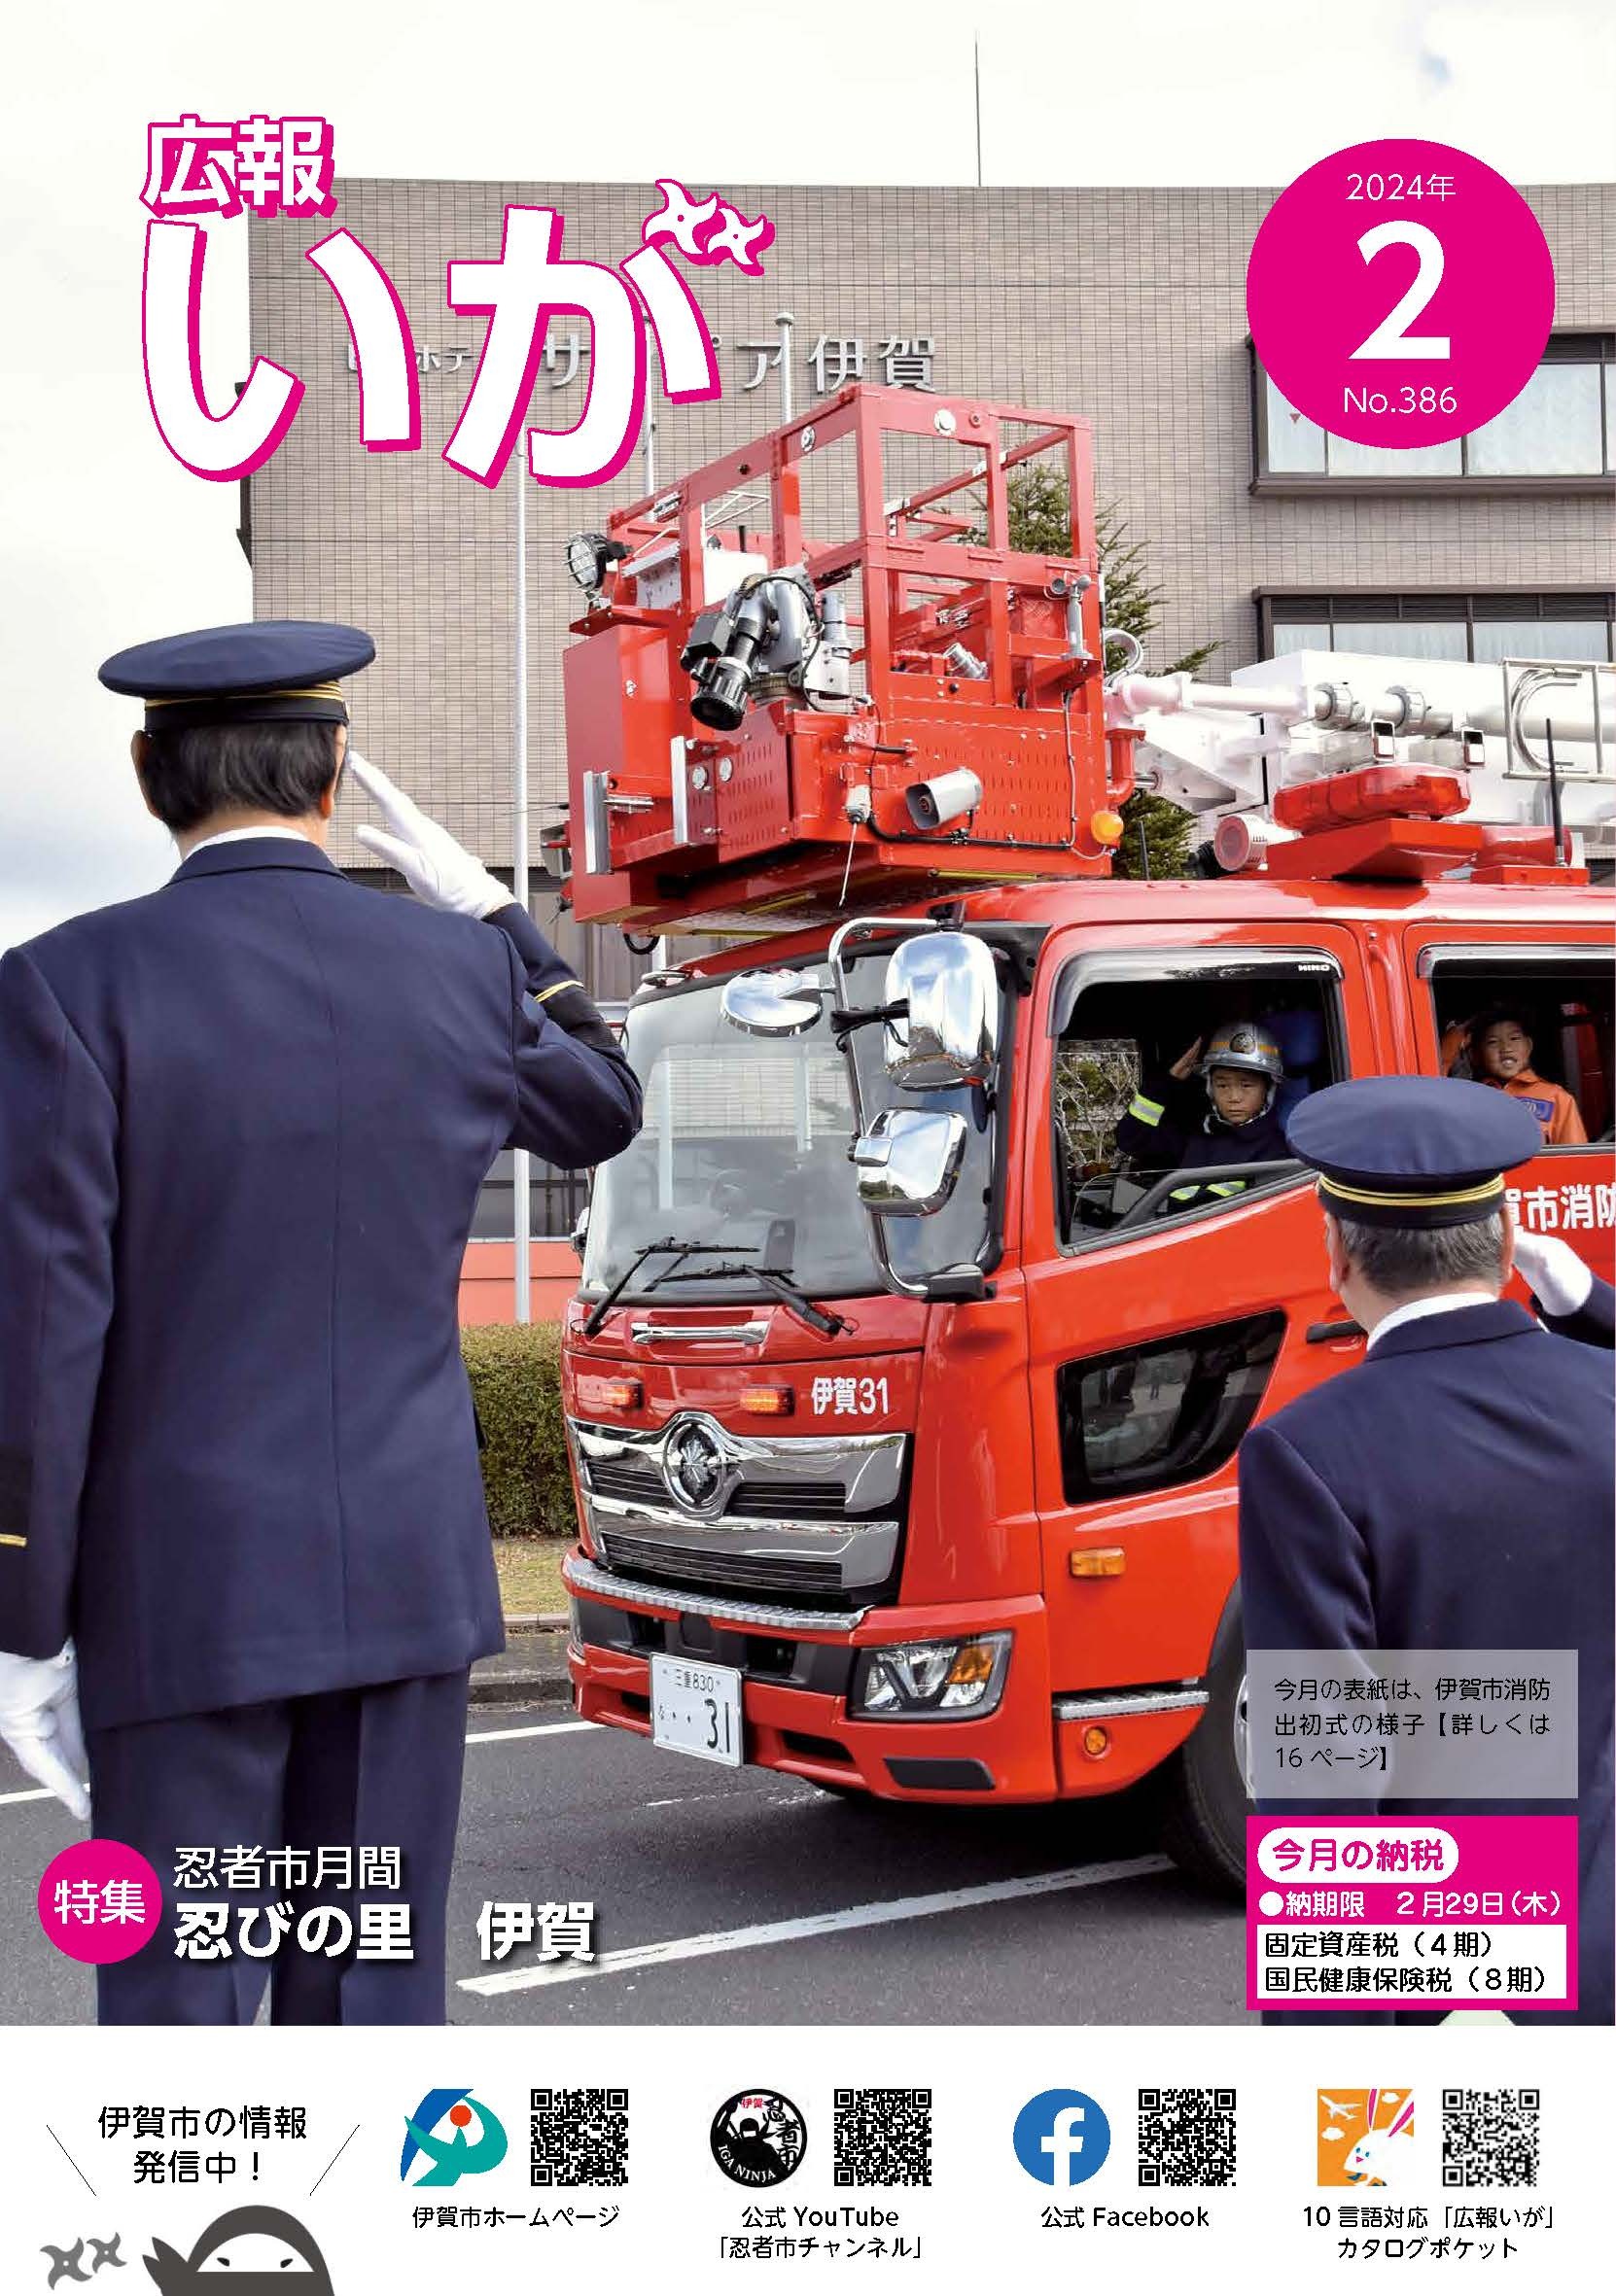 今月の表紙は、伊賀市消防出初式の様子